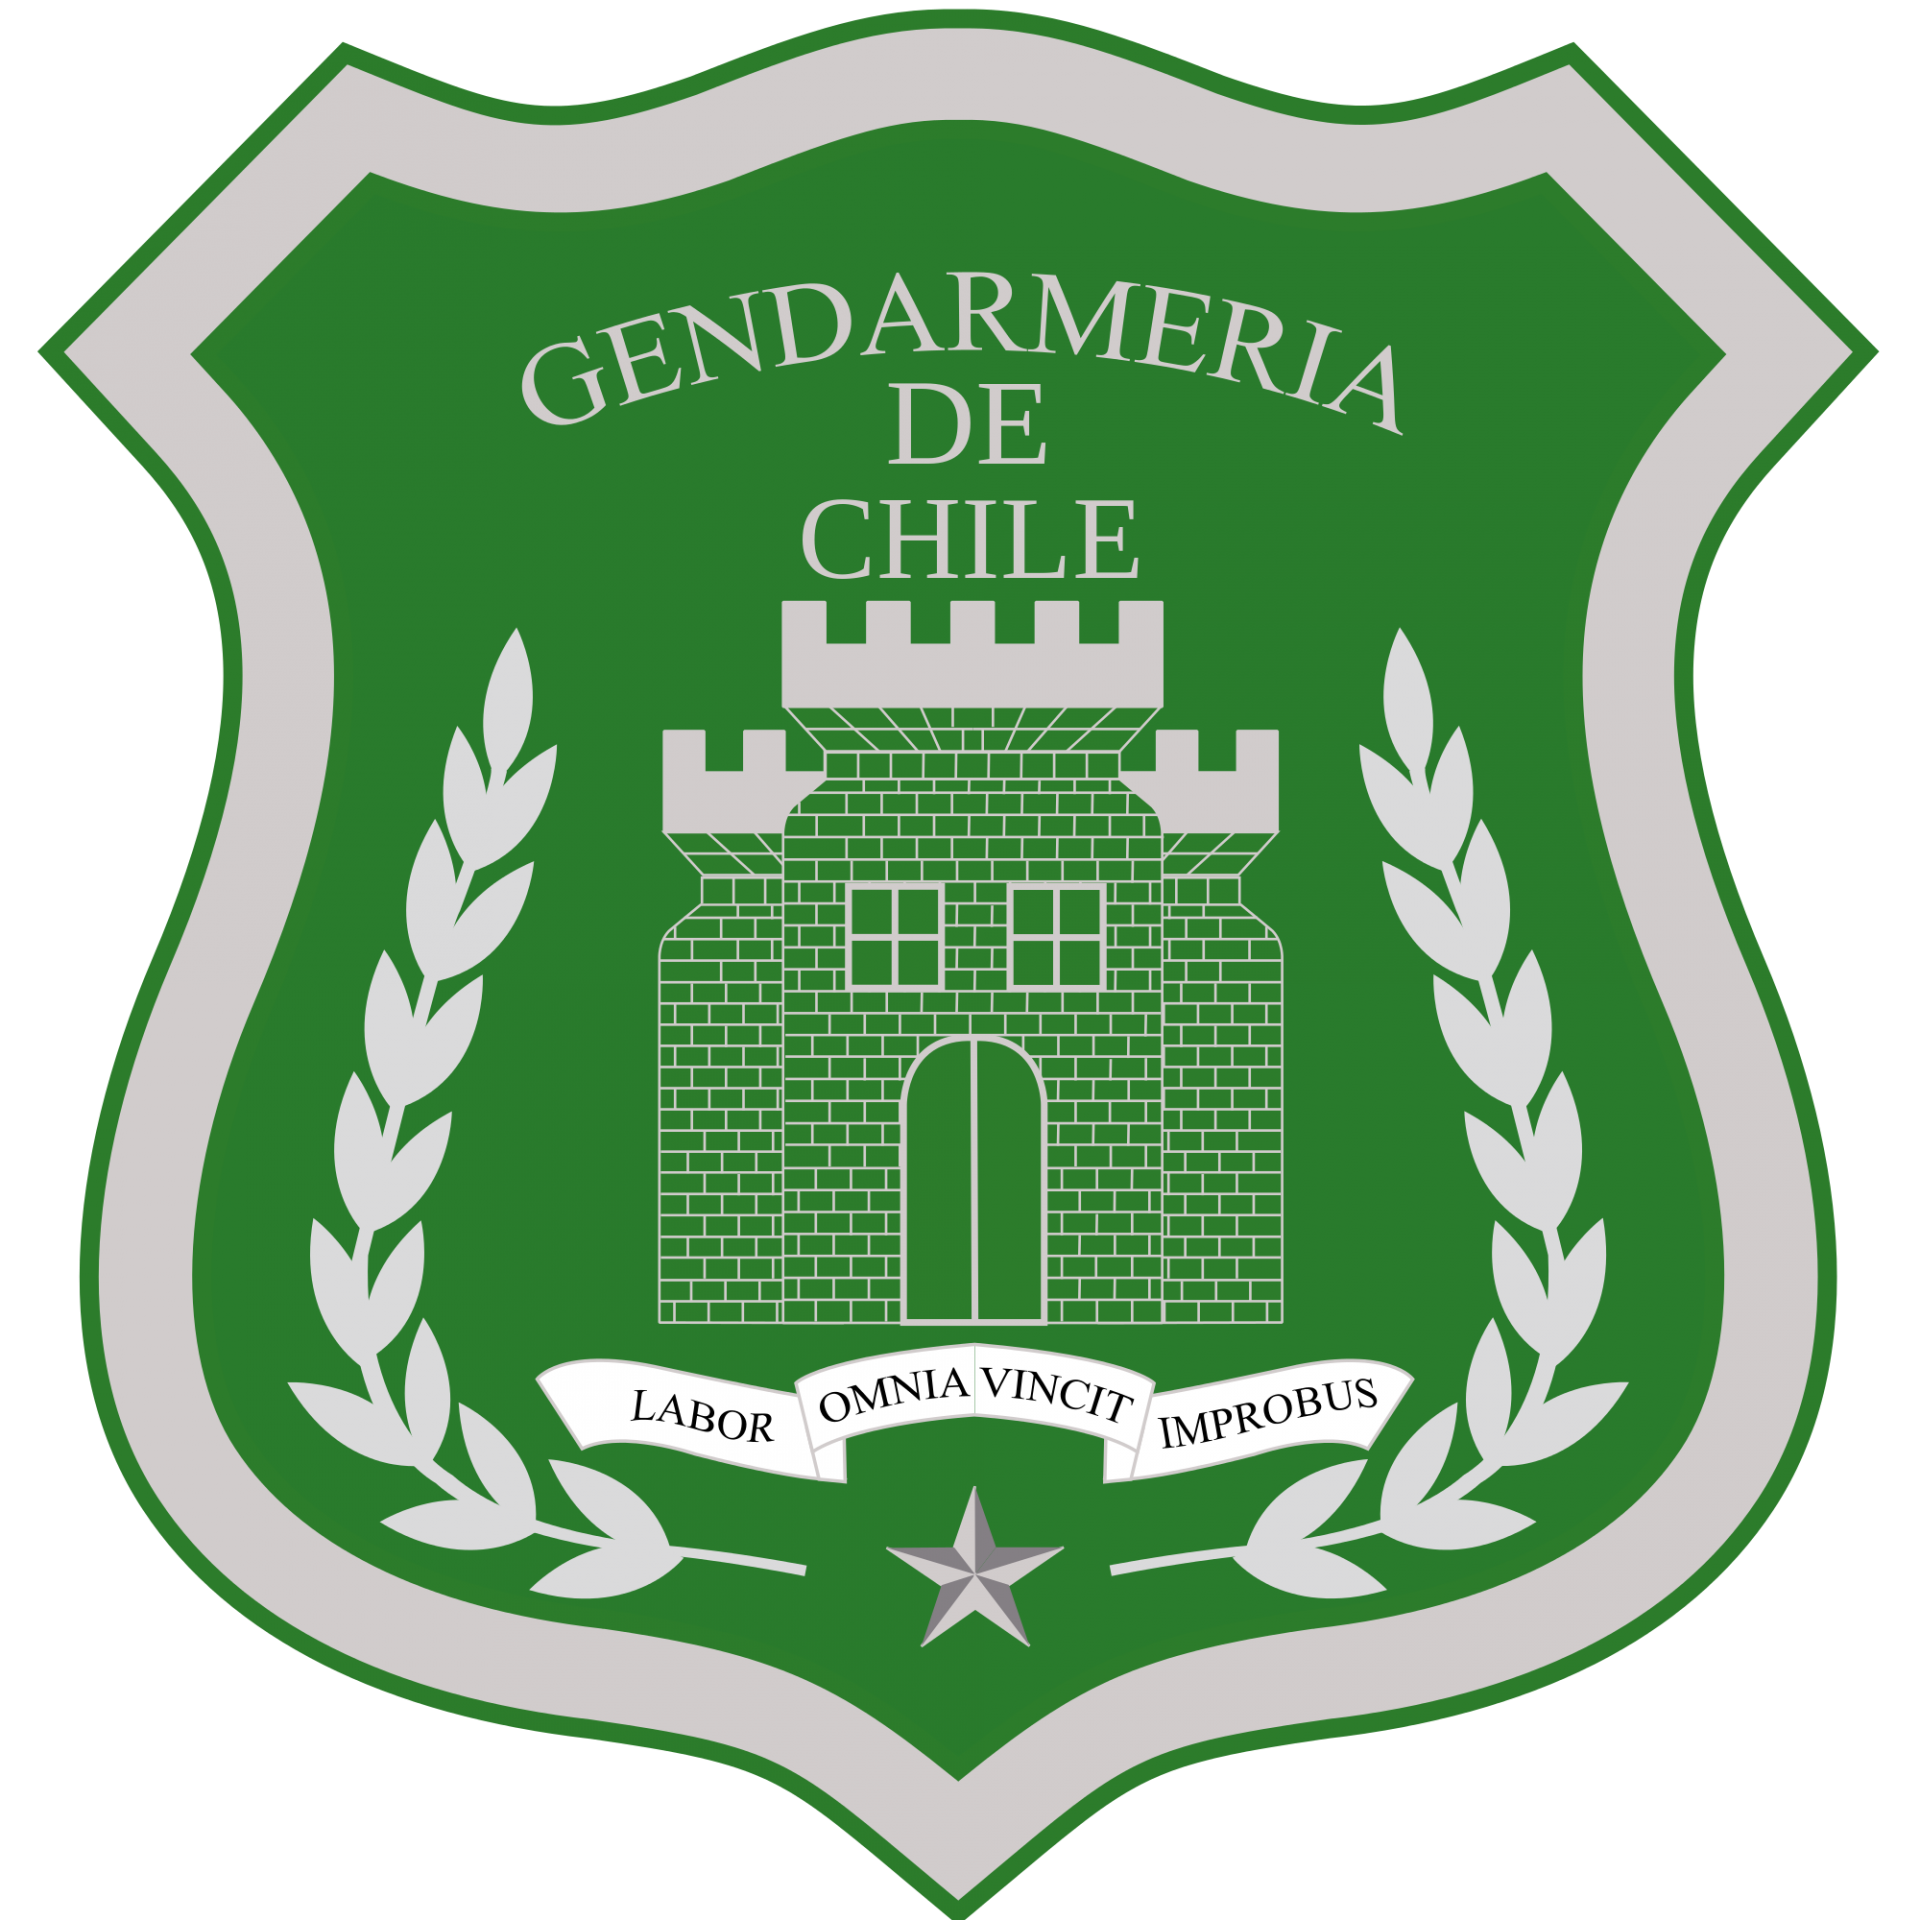 Escudo gendarmeria de chile 2019